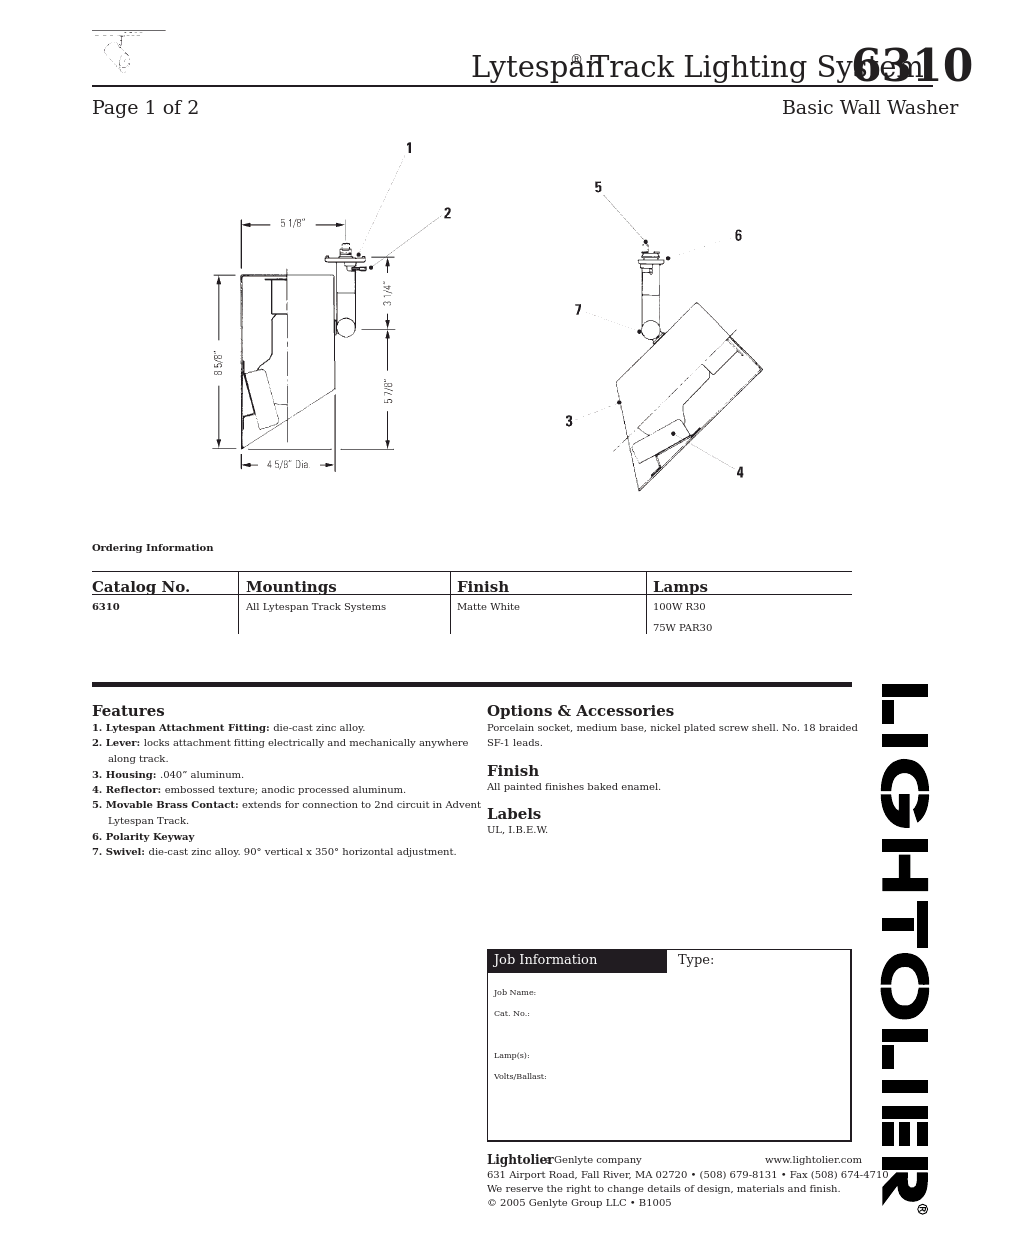 Lytespan Track Lighting System 6310